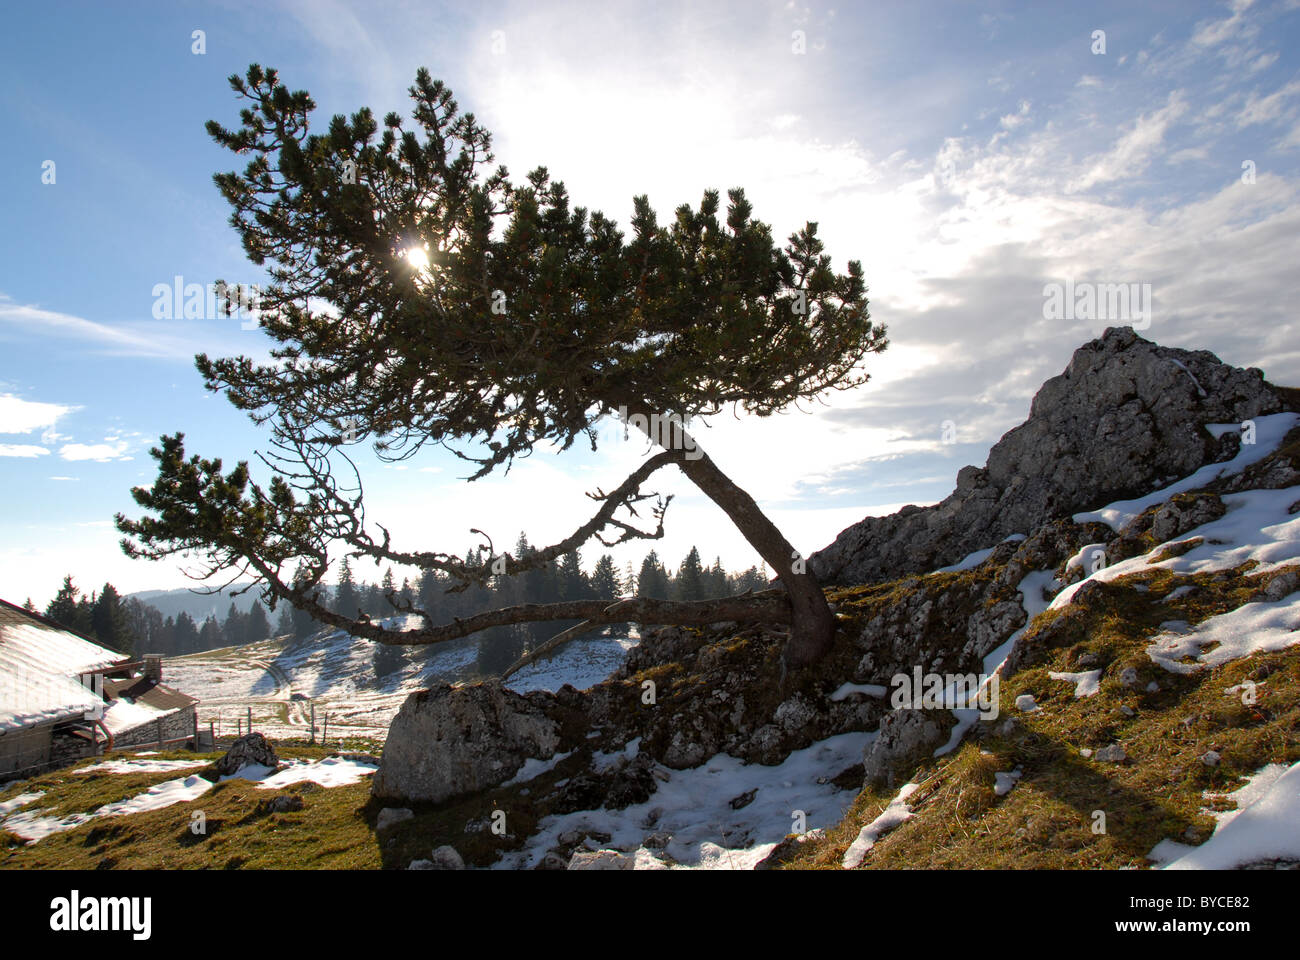 Pine tree crooked on ridge of Jura moutain range at Chaumont,Neuenburg, Switzerland Stock Photo